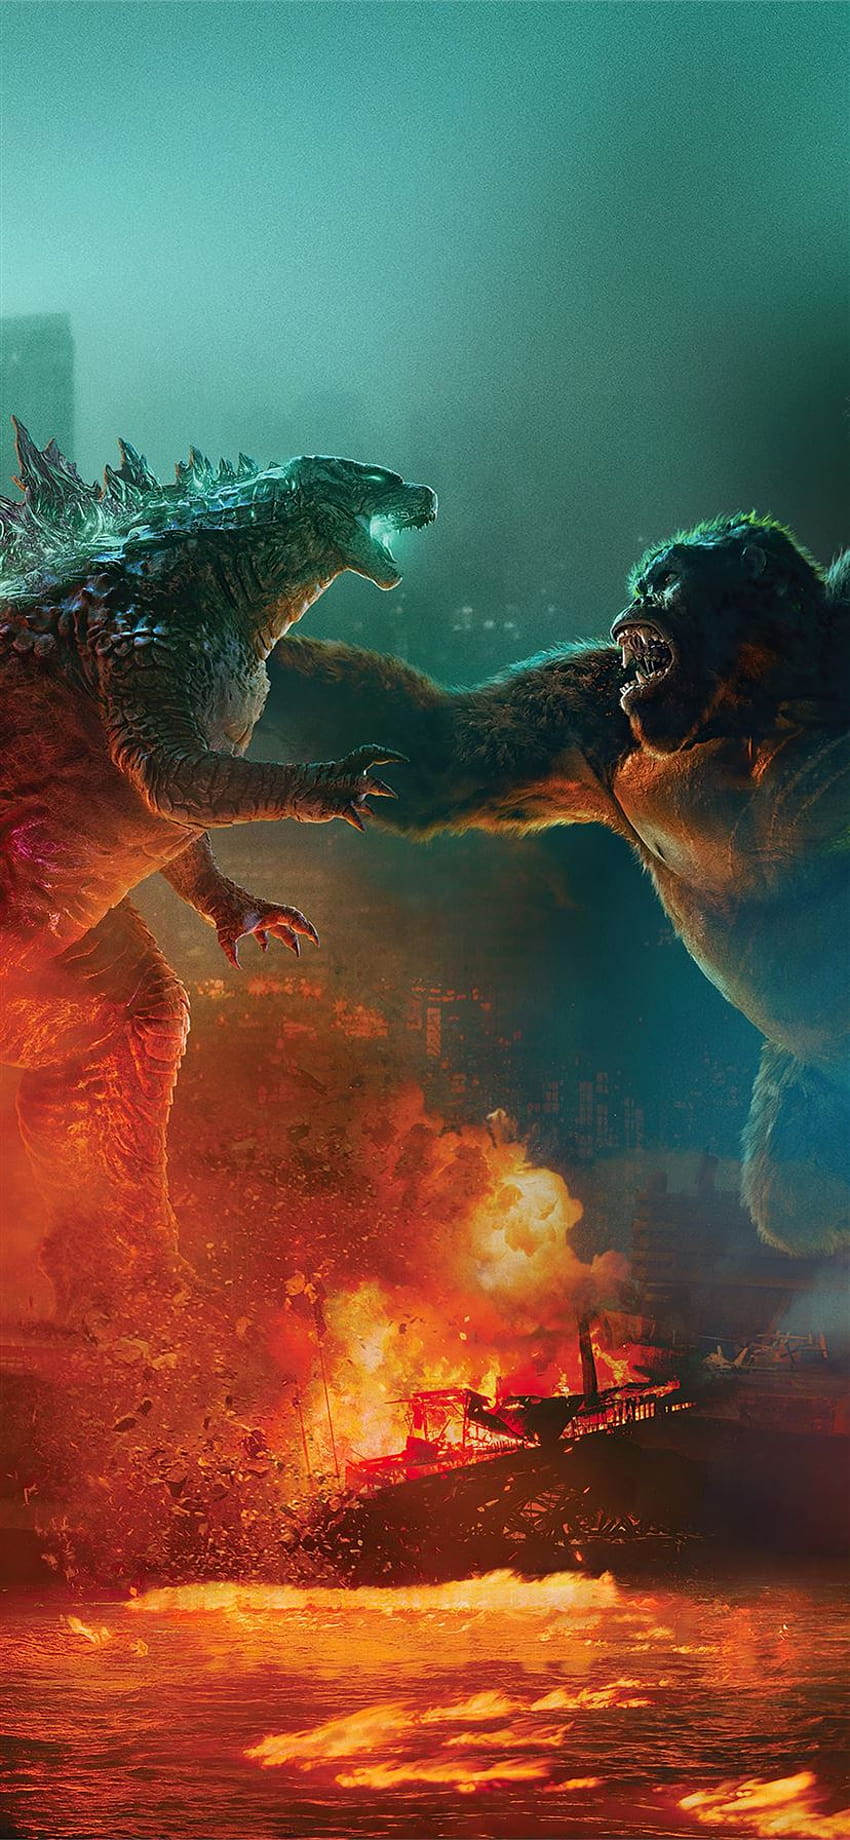 Mejor Godzilla vs kong iPhone 11, king kong vs godzilla iphone fondo de pantalla del teléfono